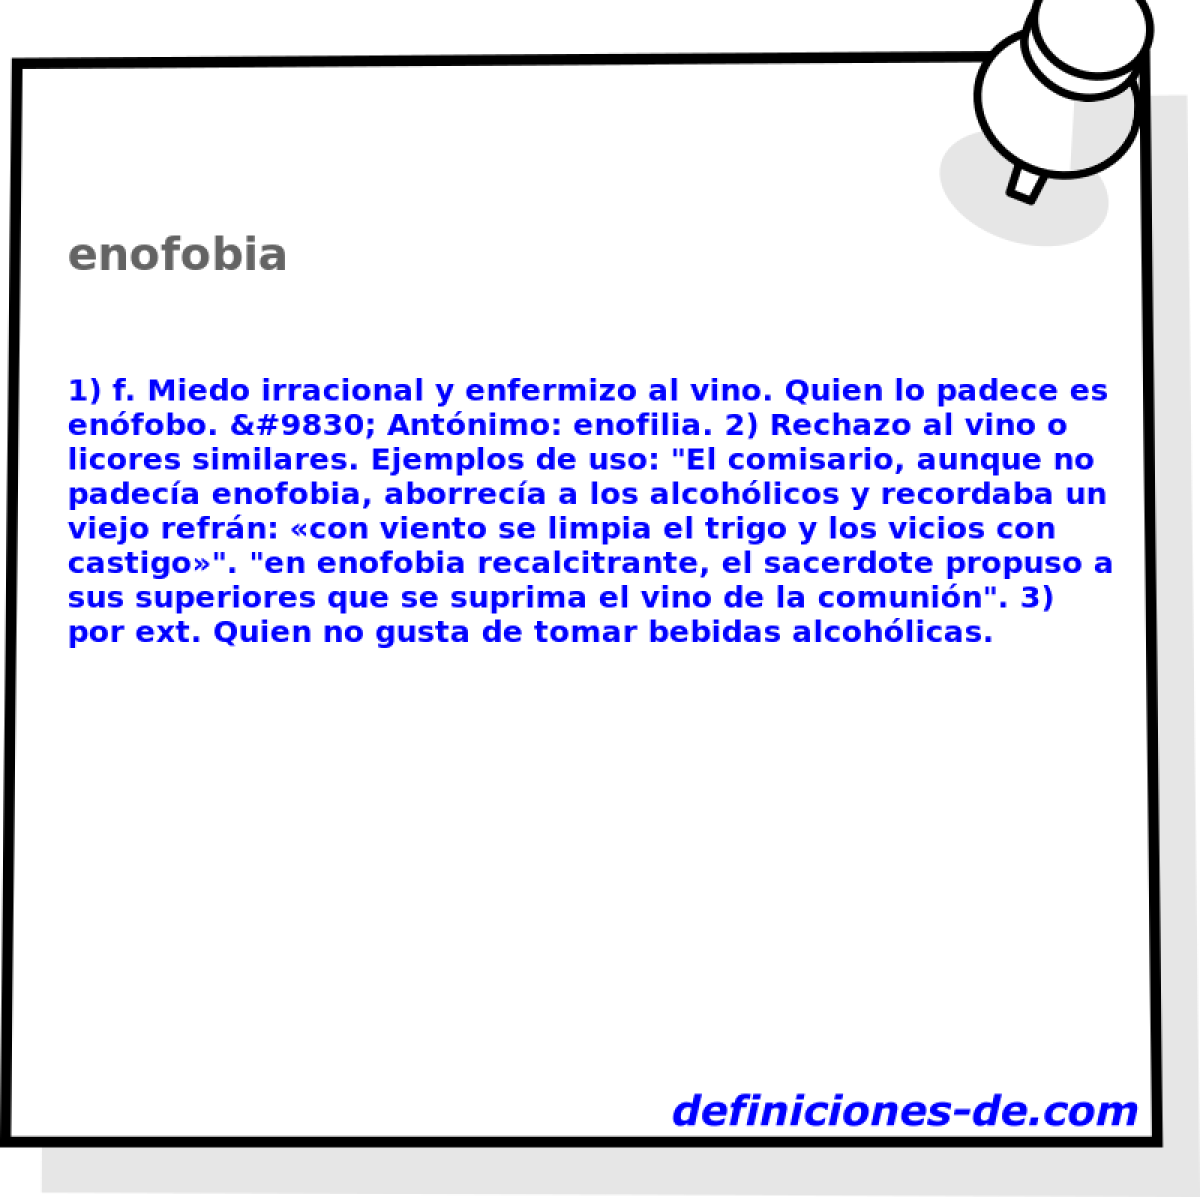 enofobia 